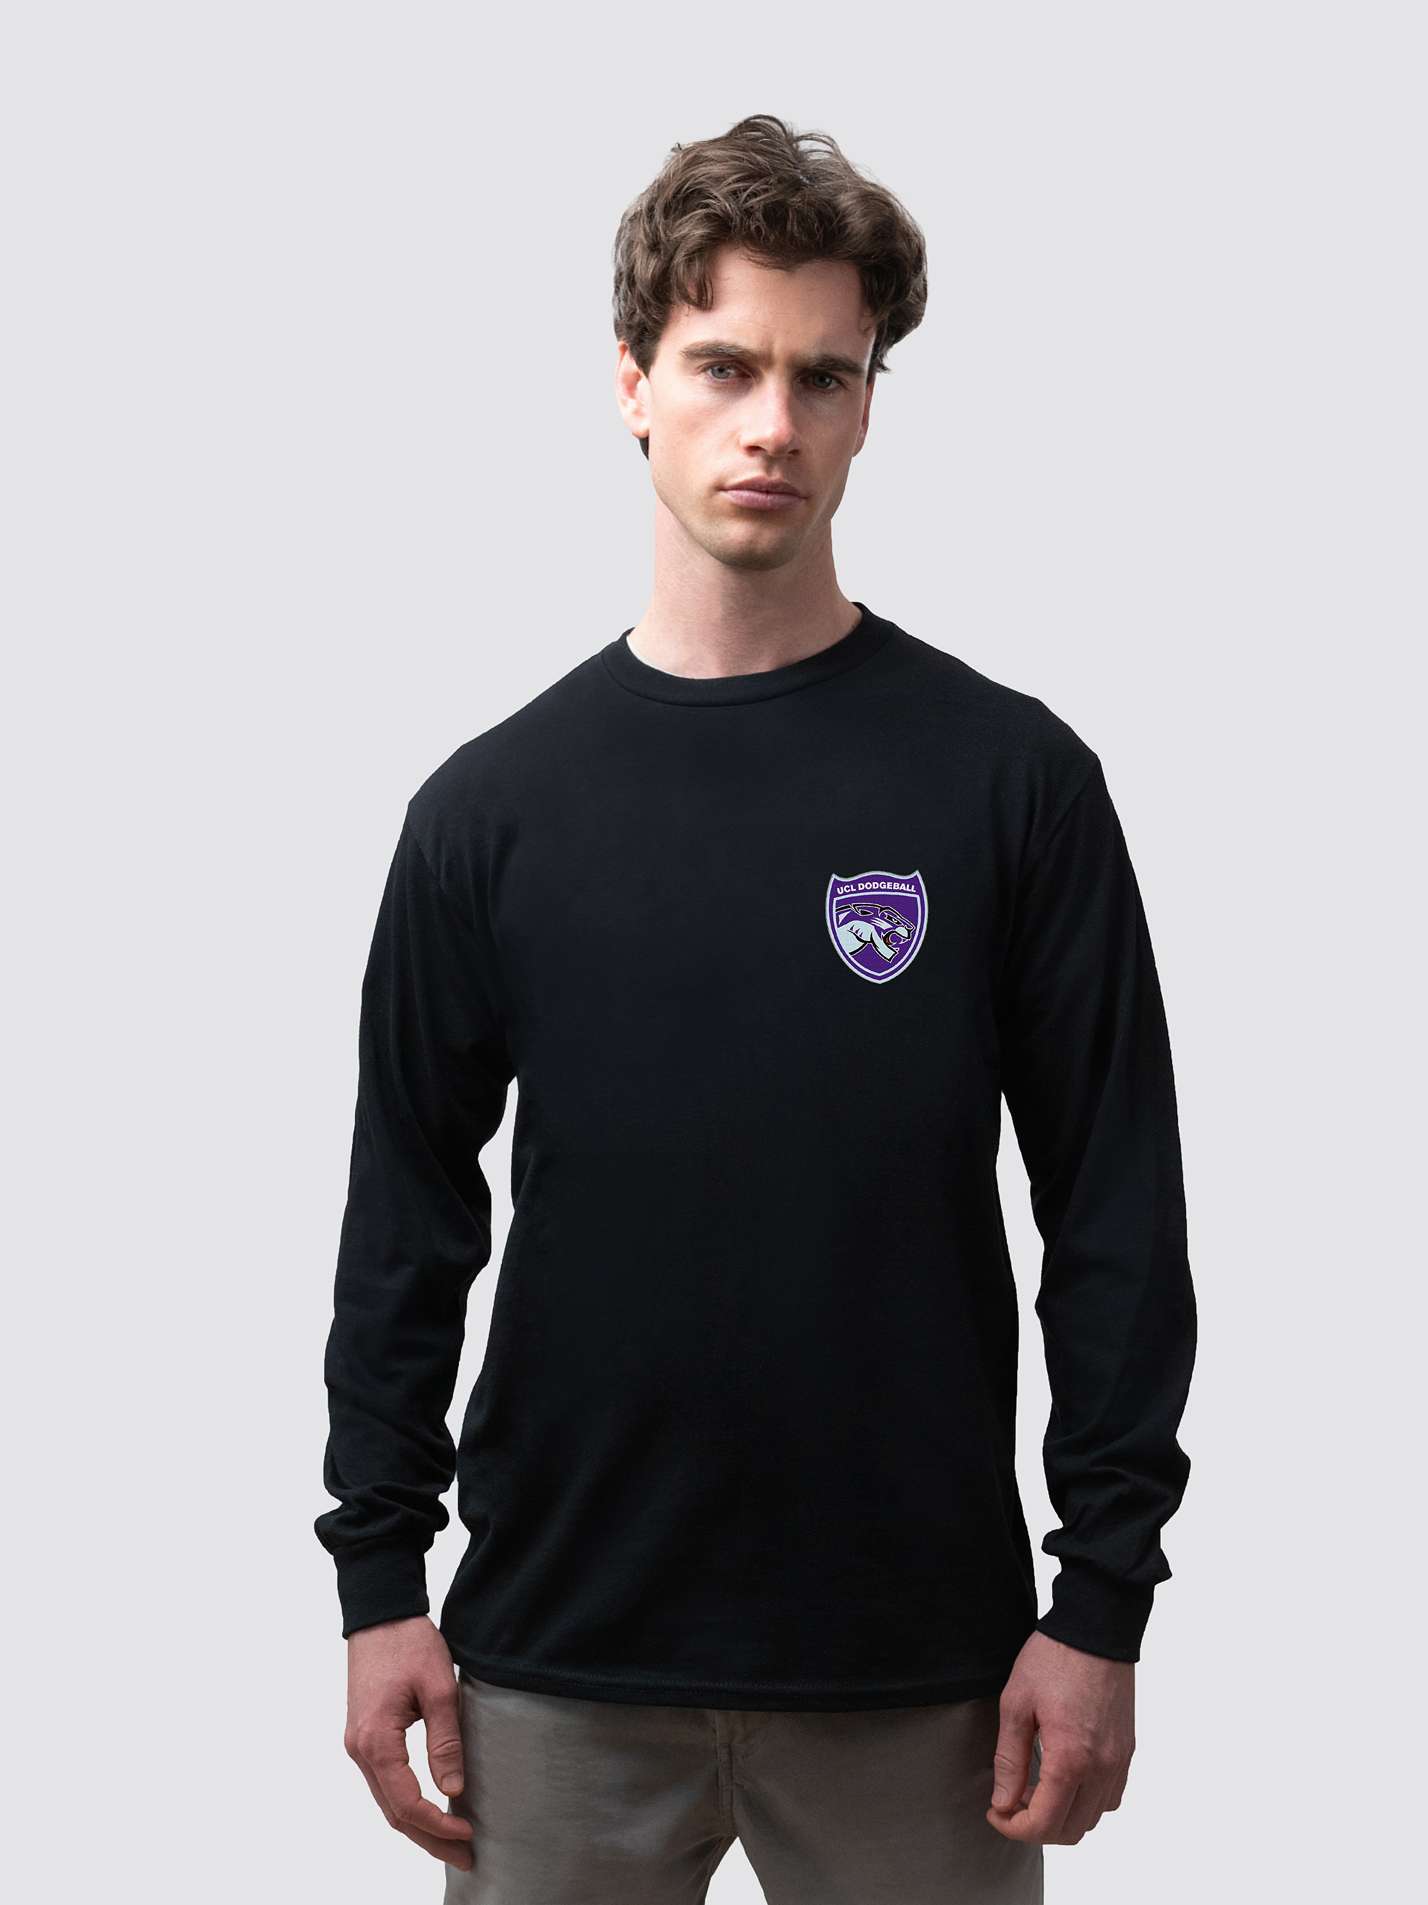 UCL Dodgeball Unisex Cotton Long Sleeve T-Shirt